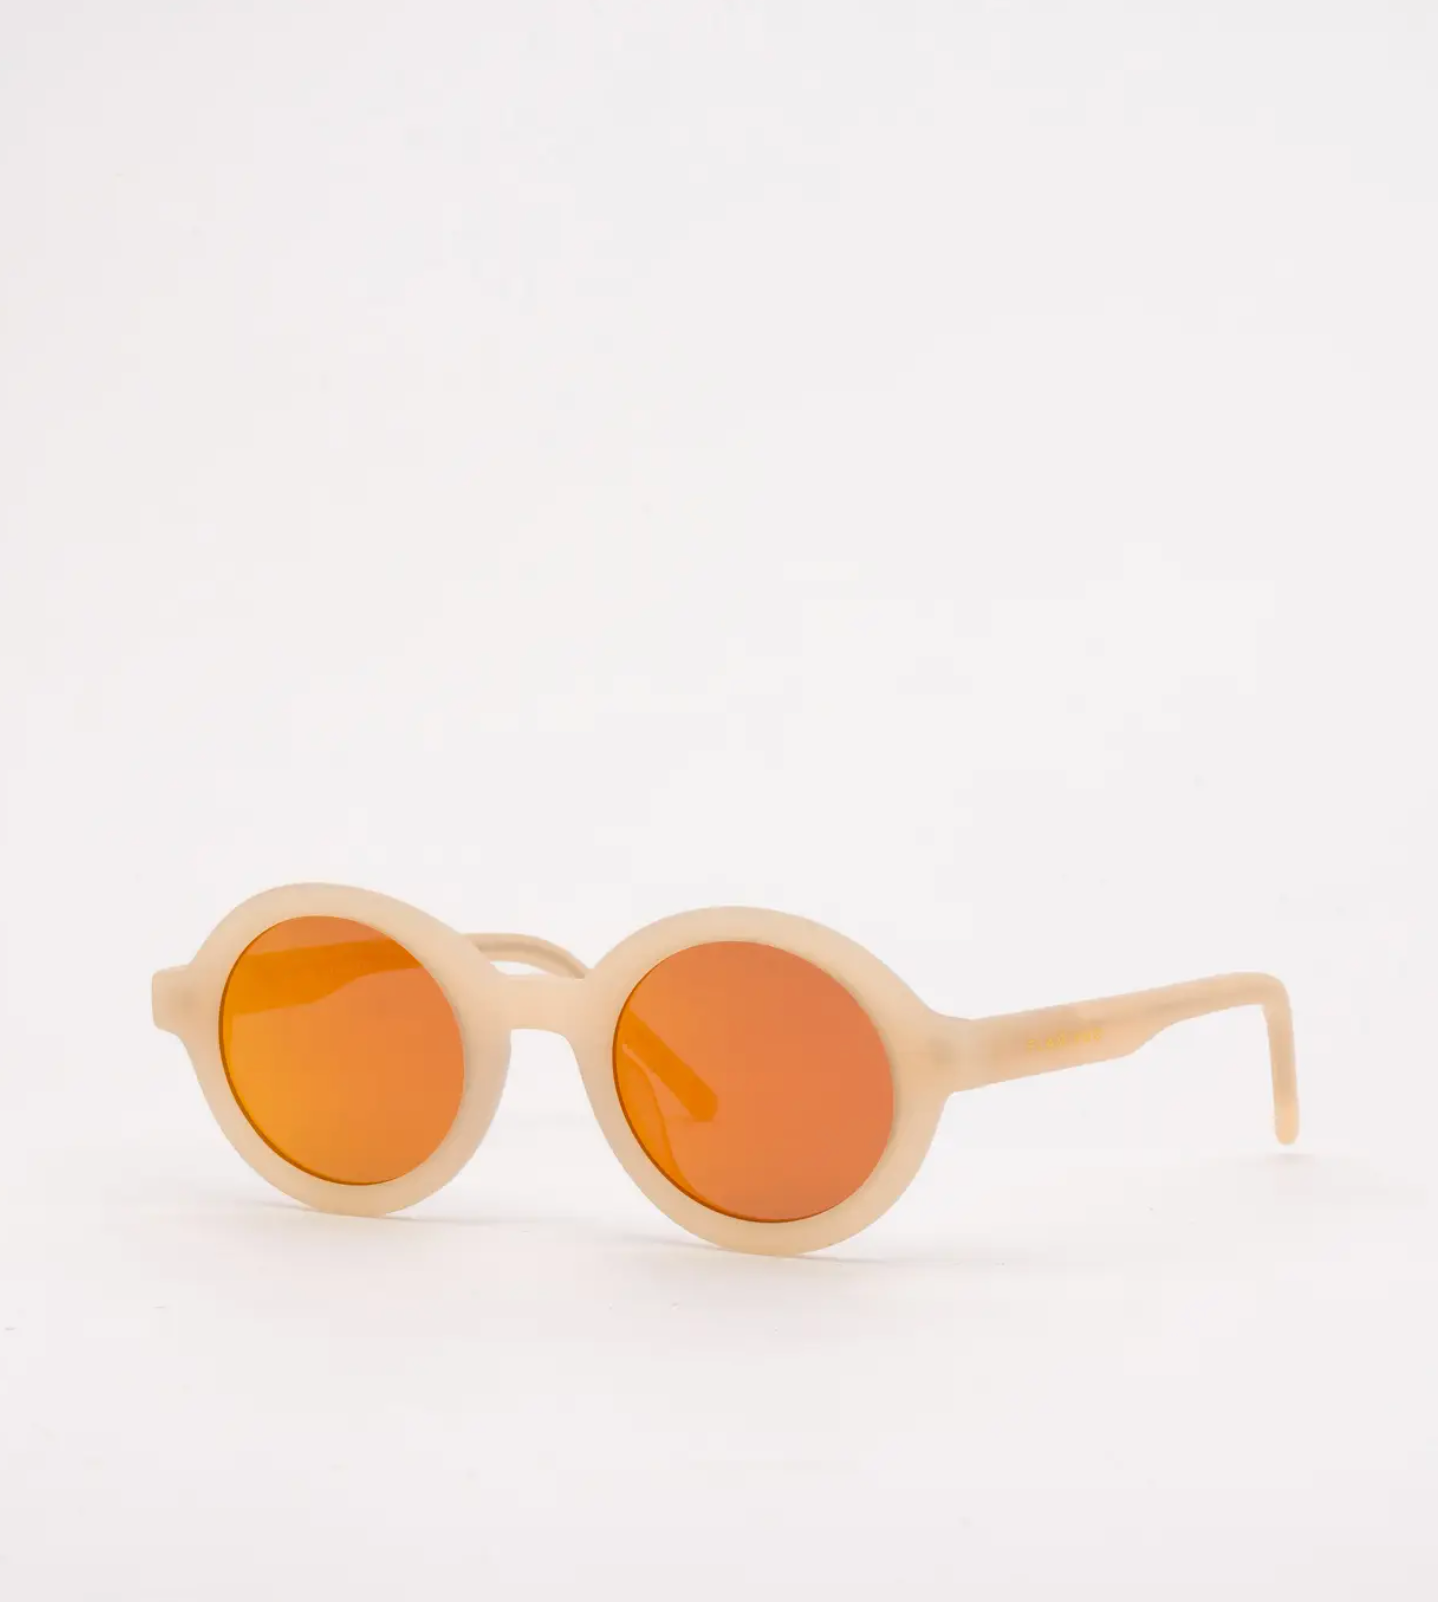  Beach Sunglasses